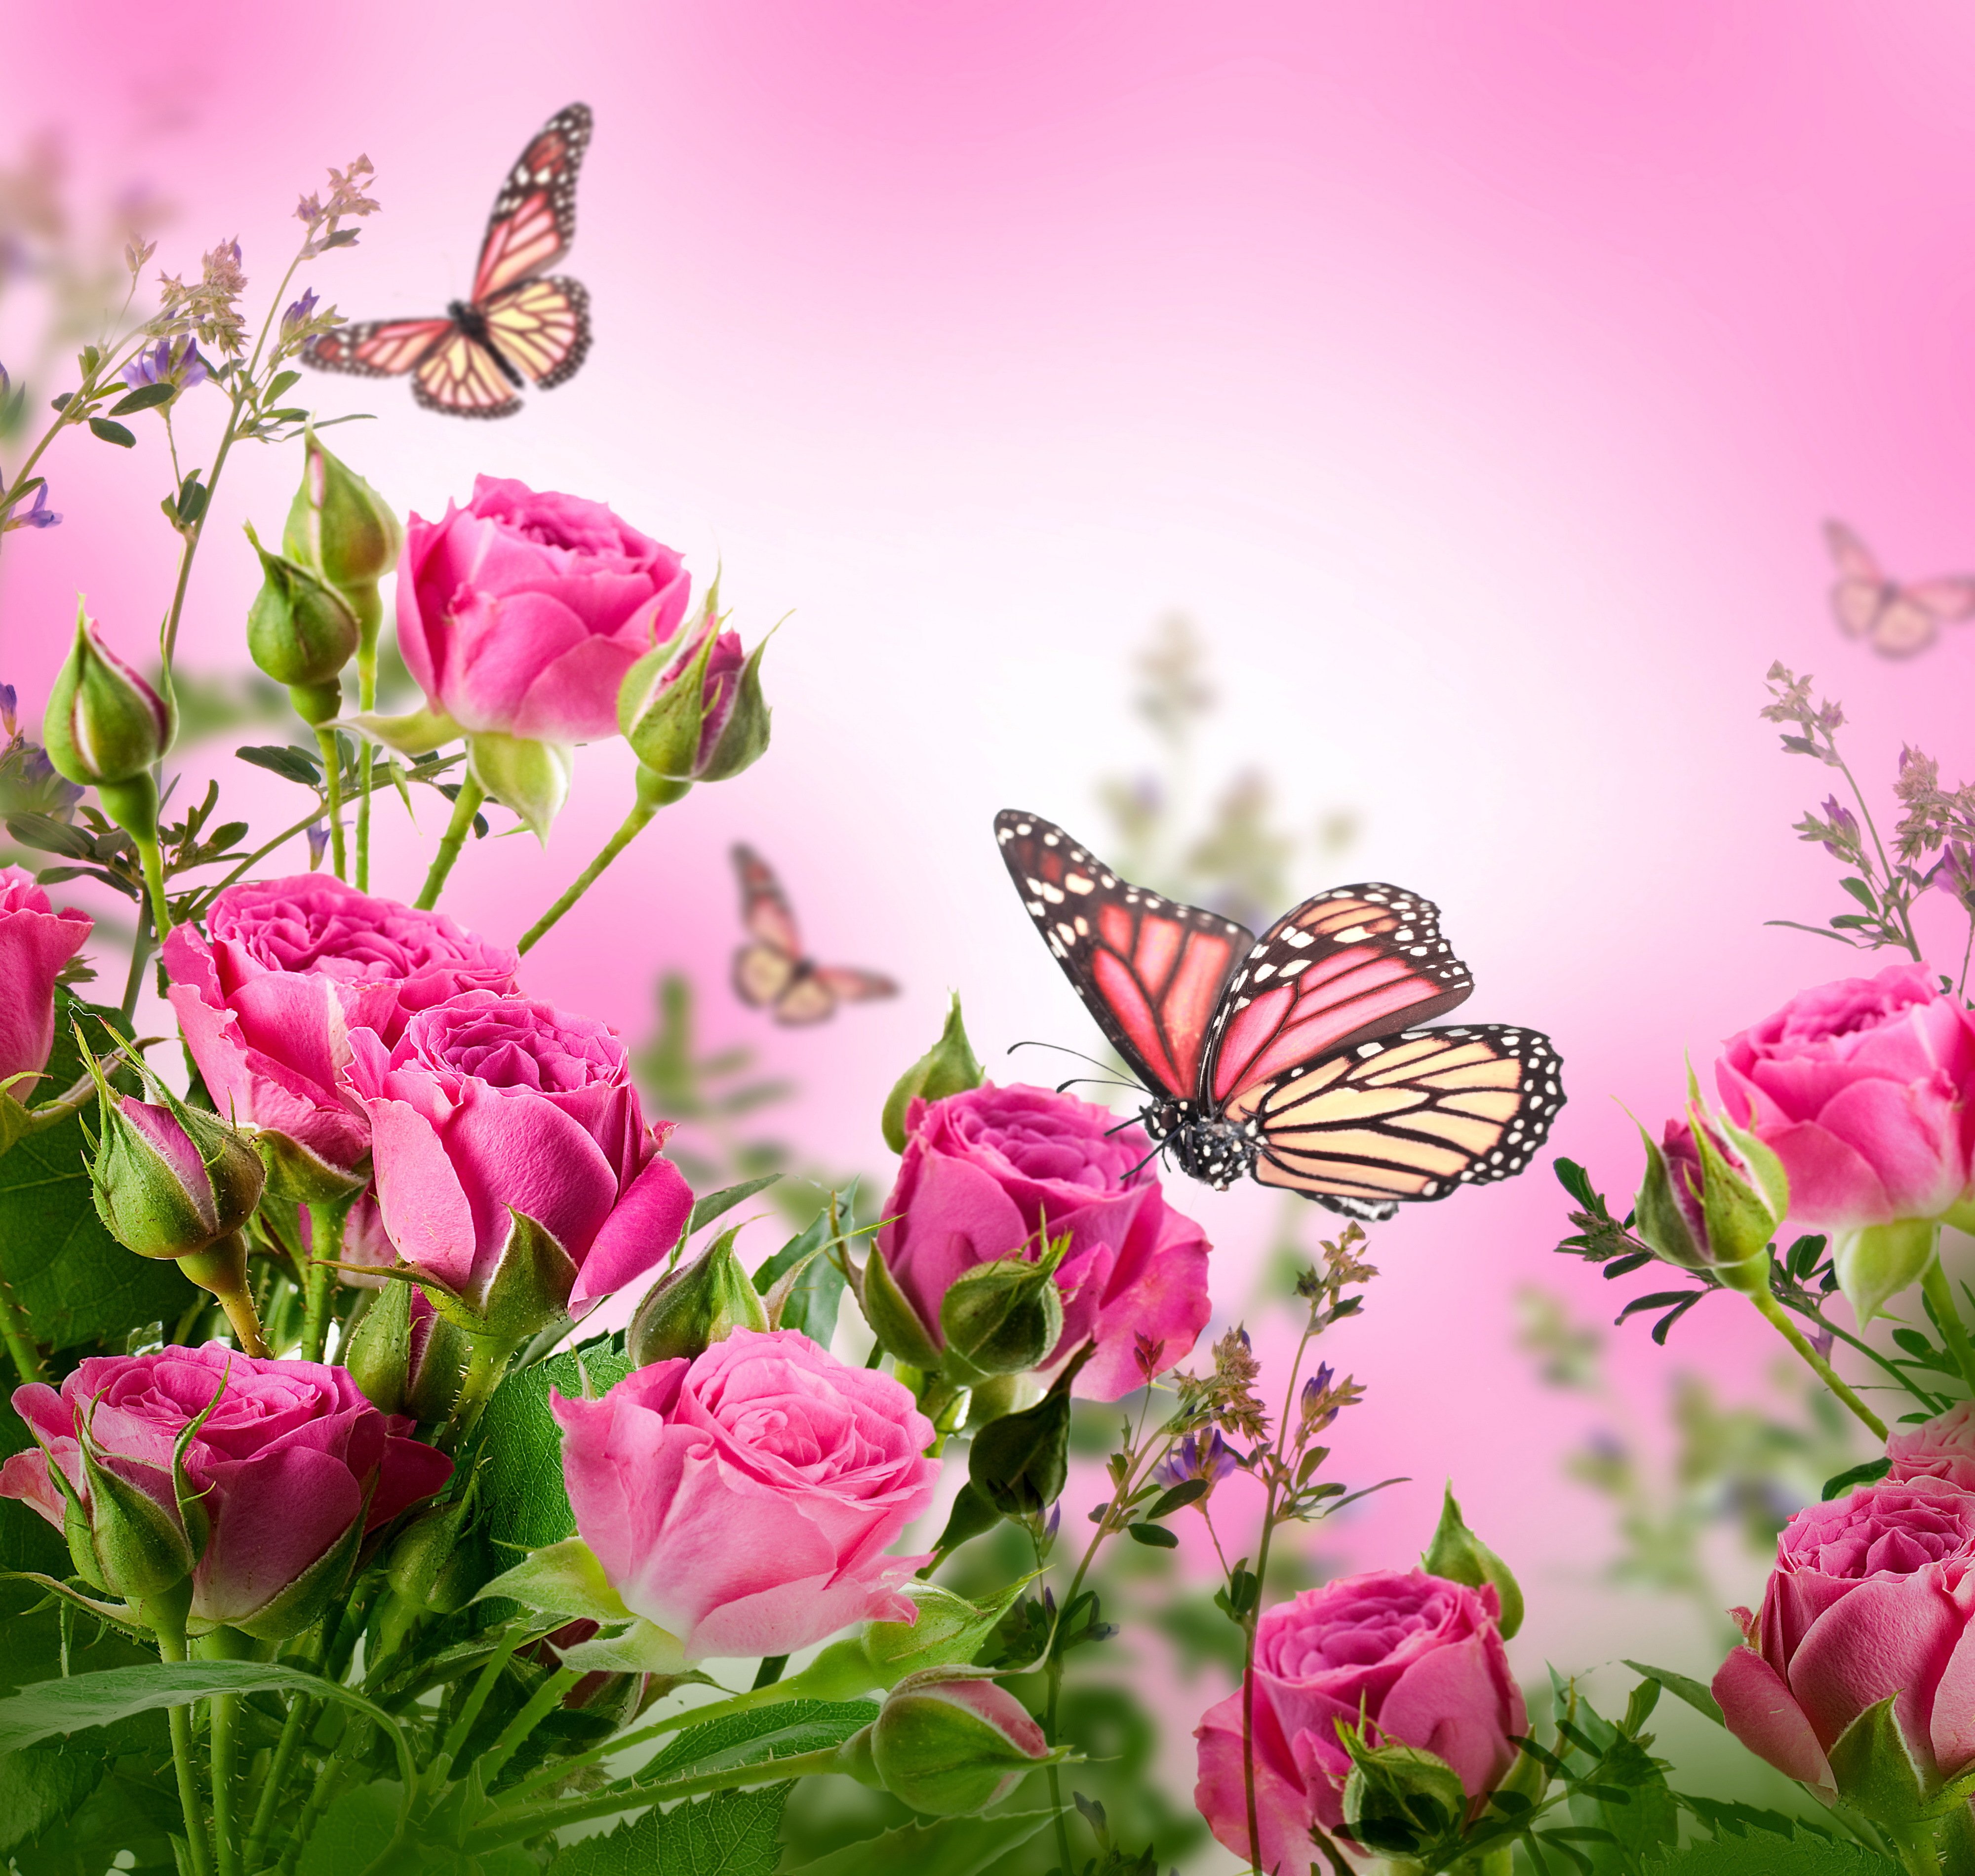  butterflies blossom beautiful flowers roses wallpapers flowers 4000x3800